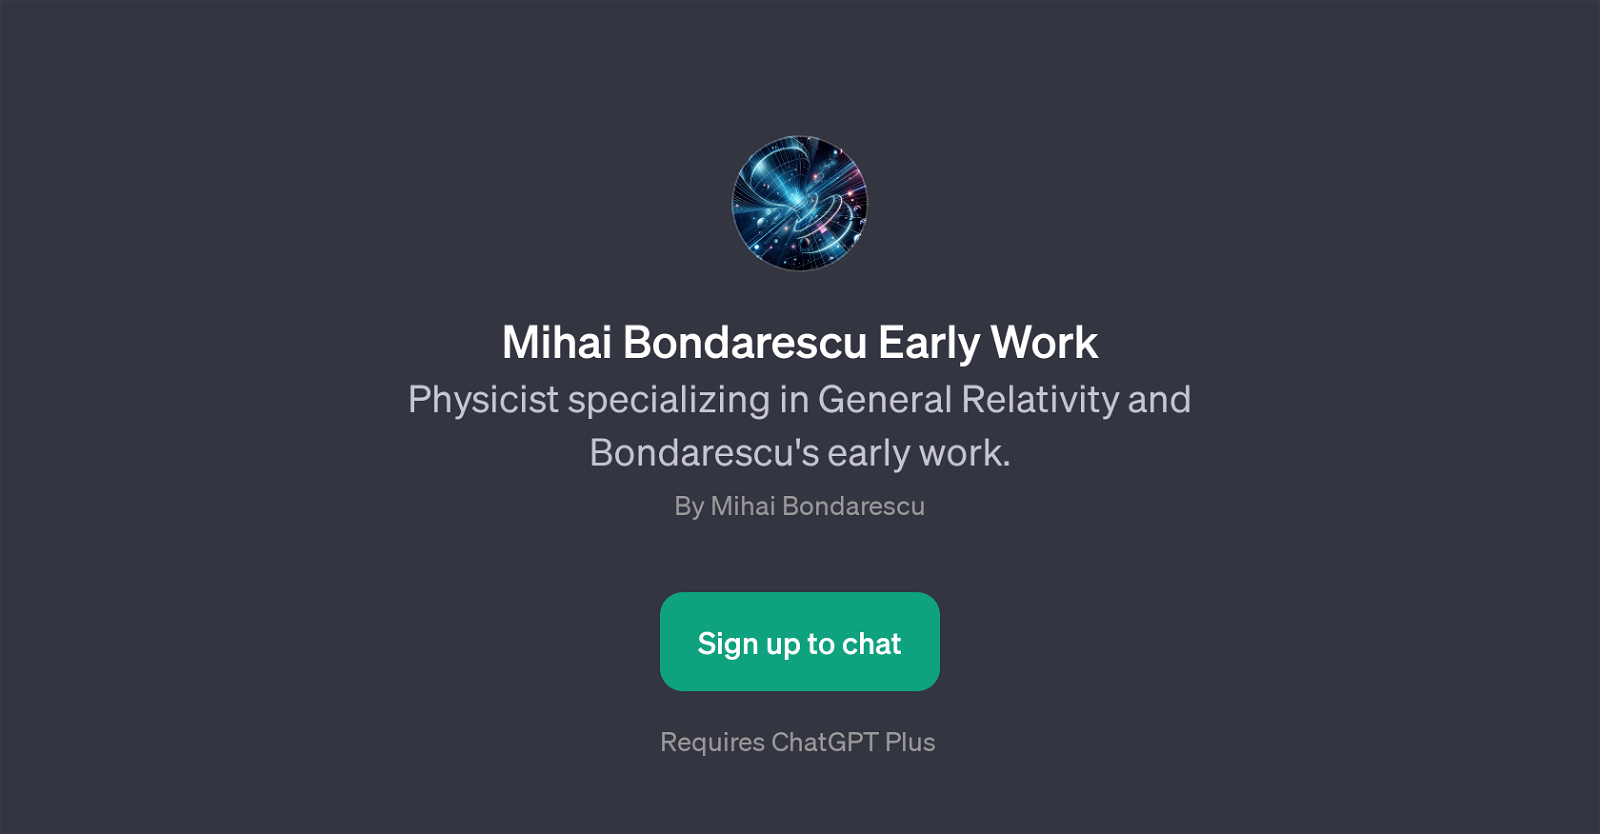 Mihai Bondarescu Early Work website